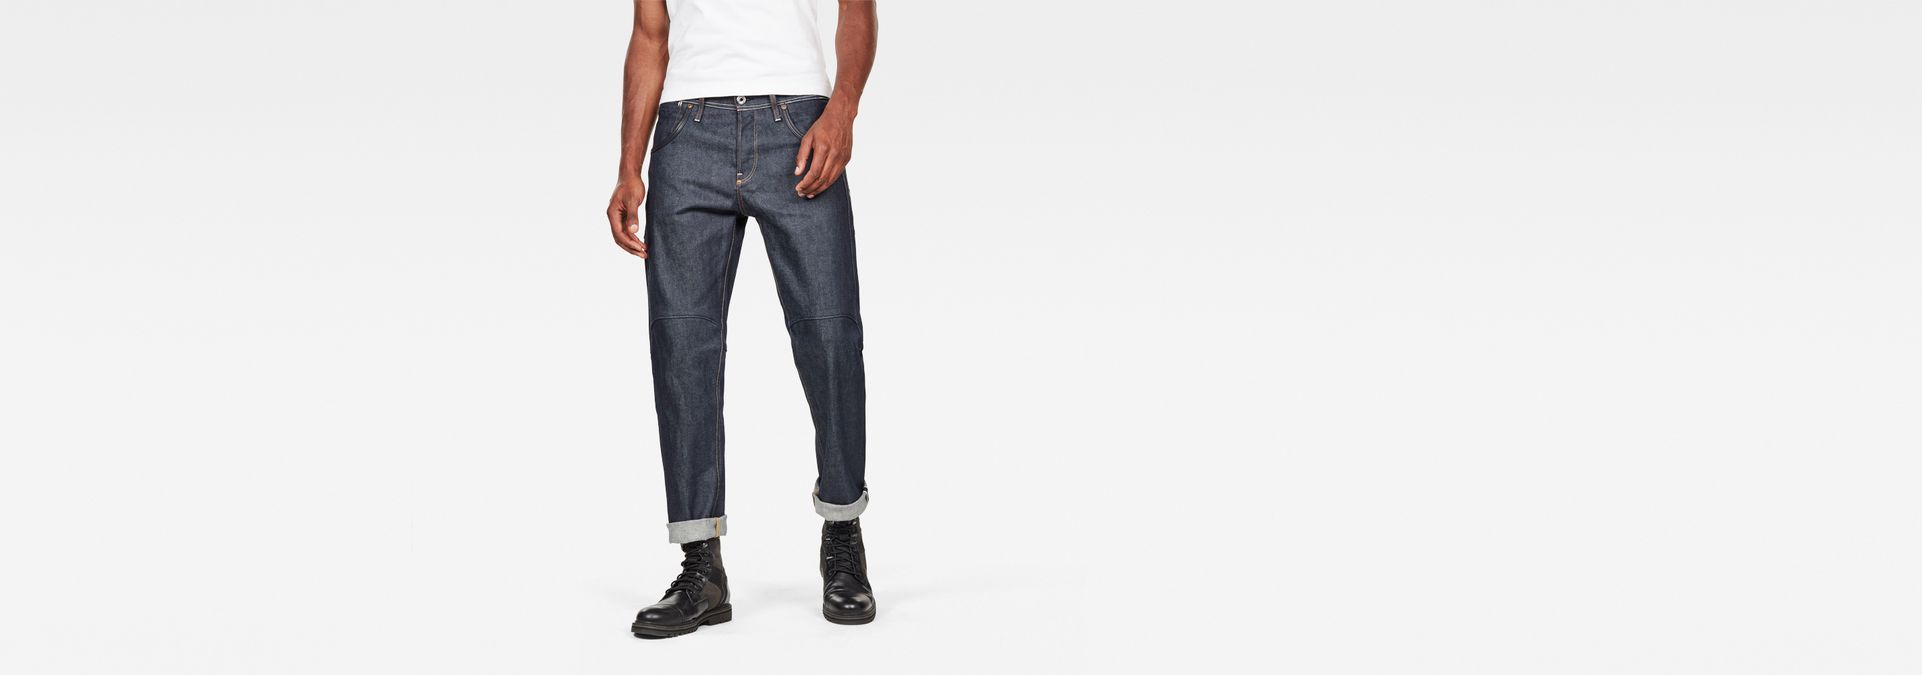 Kapper Gemaakt van stoomboot 30 Years G-Star Jackpant 3D Straight Jeans | G-Star RAW®